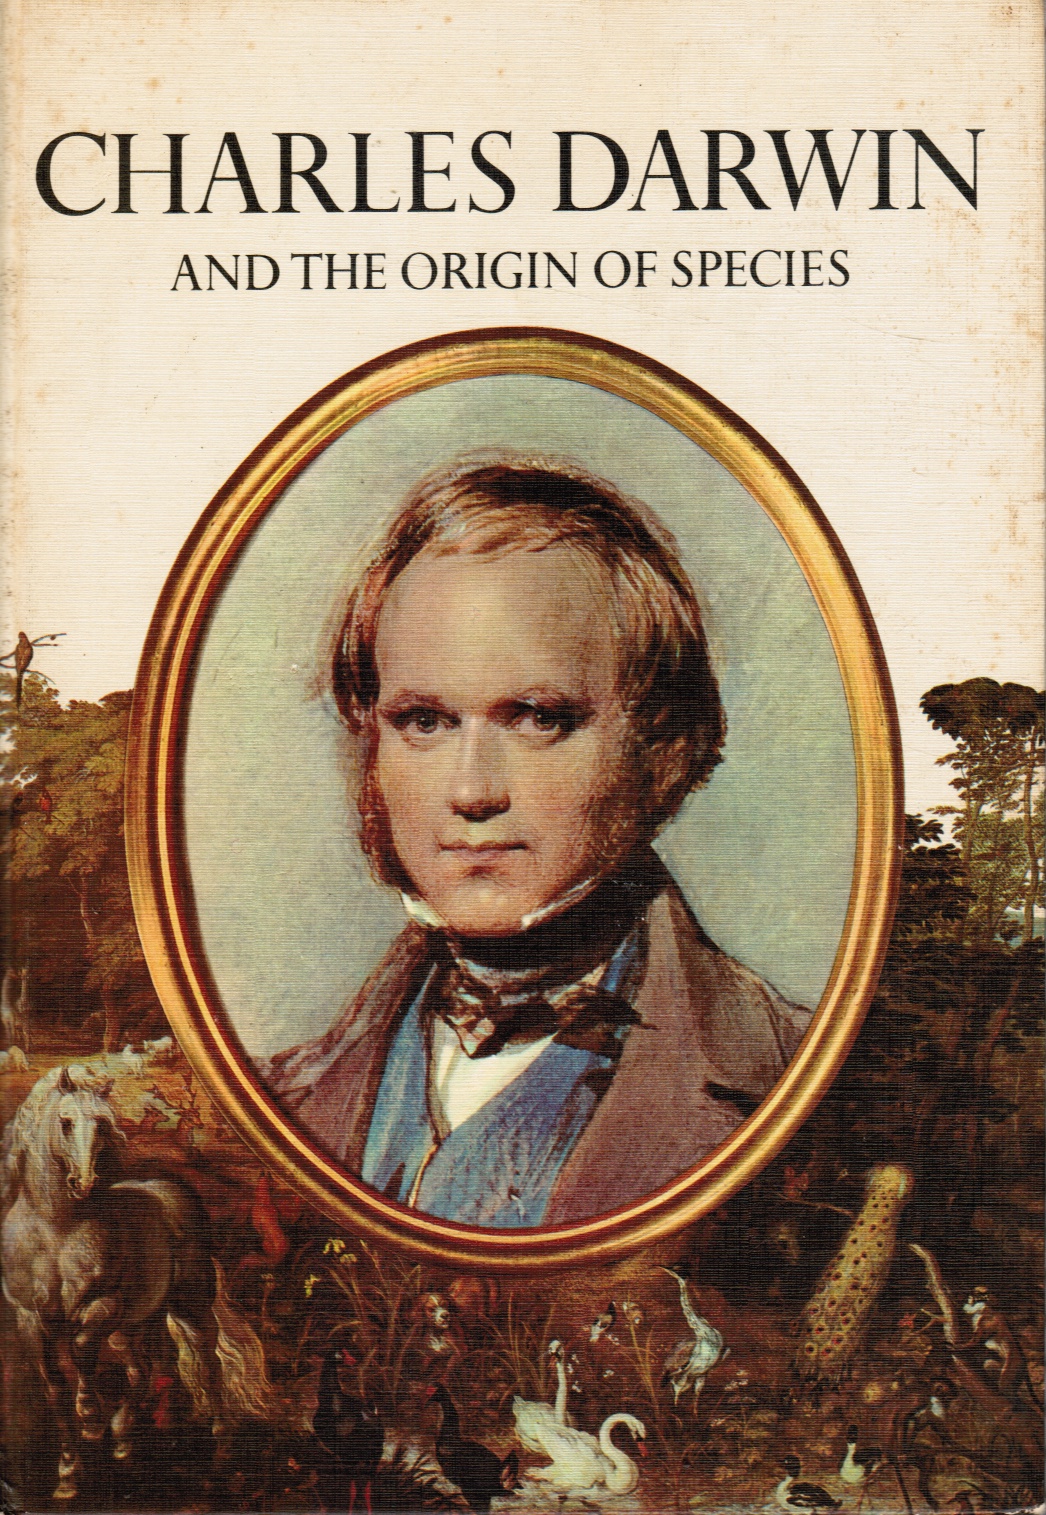 KARP, WALTER - Charles Darwin and the Origin of Species